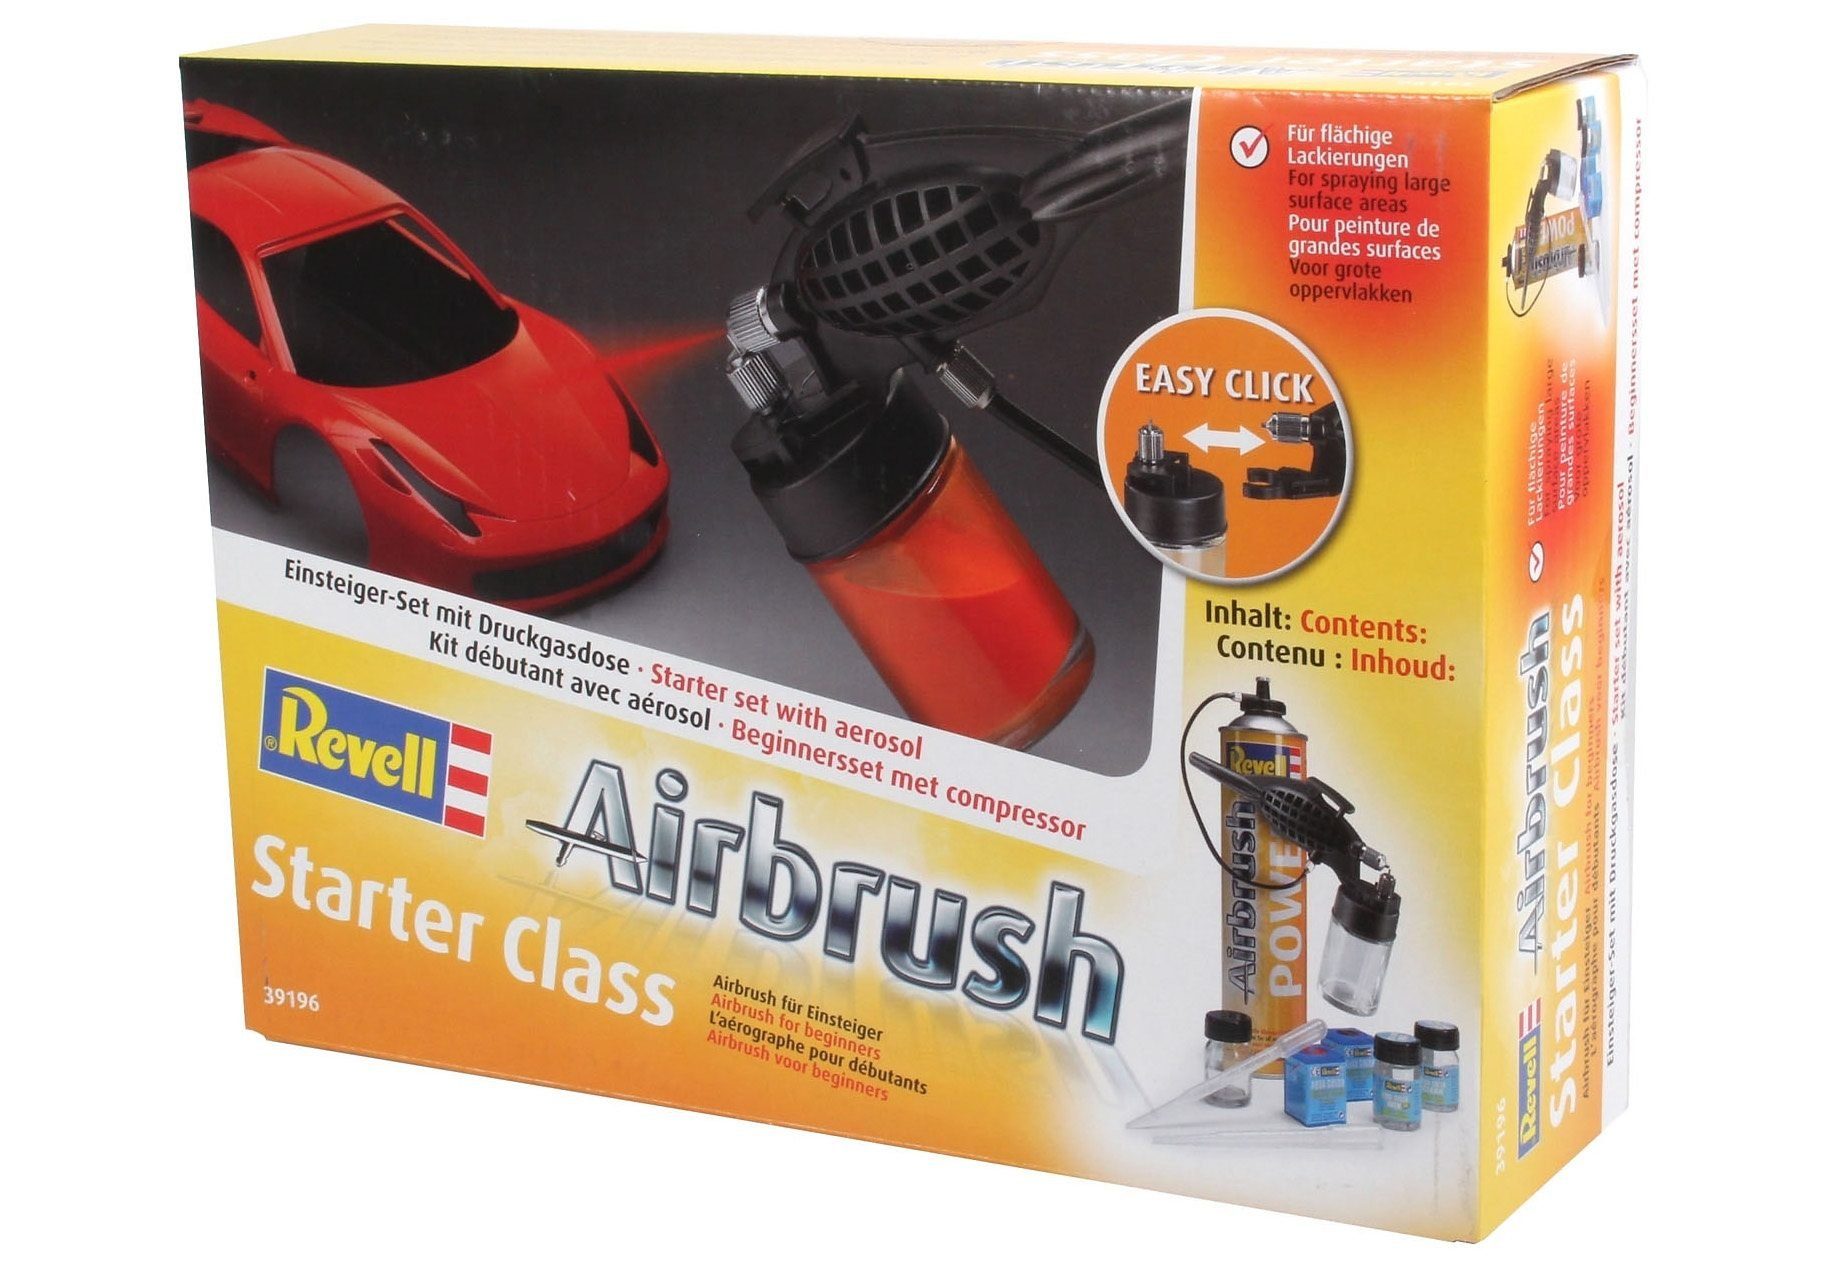 Revell® Farbsprühgerät Airbrush - Starter class